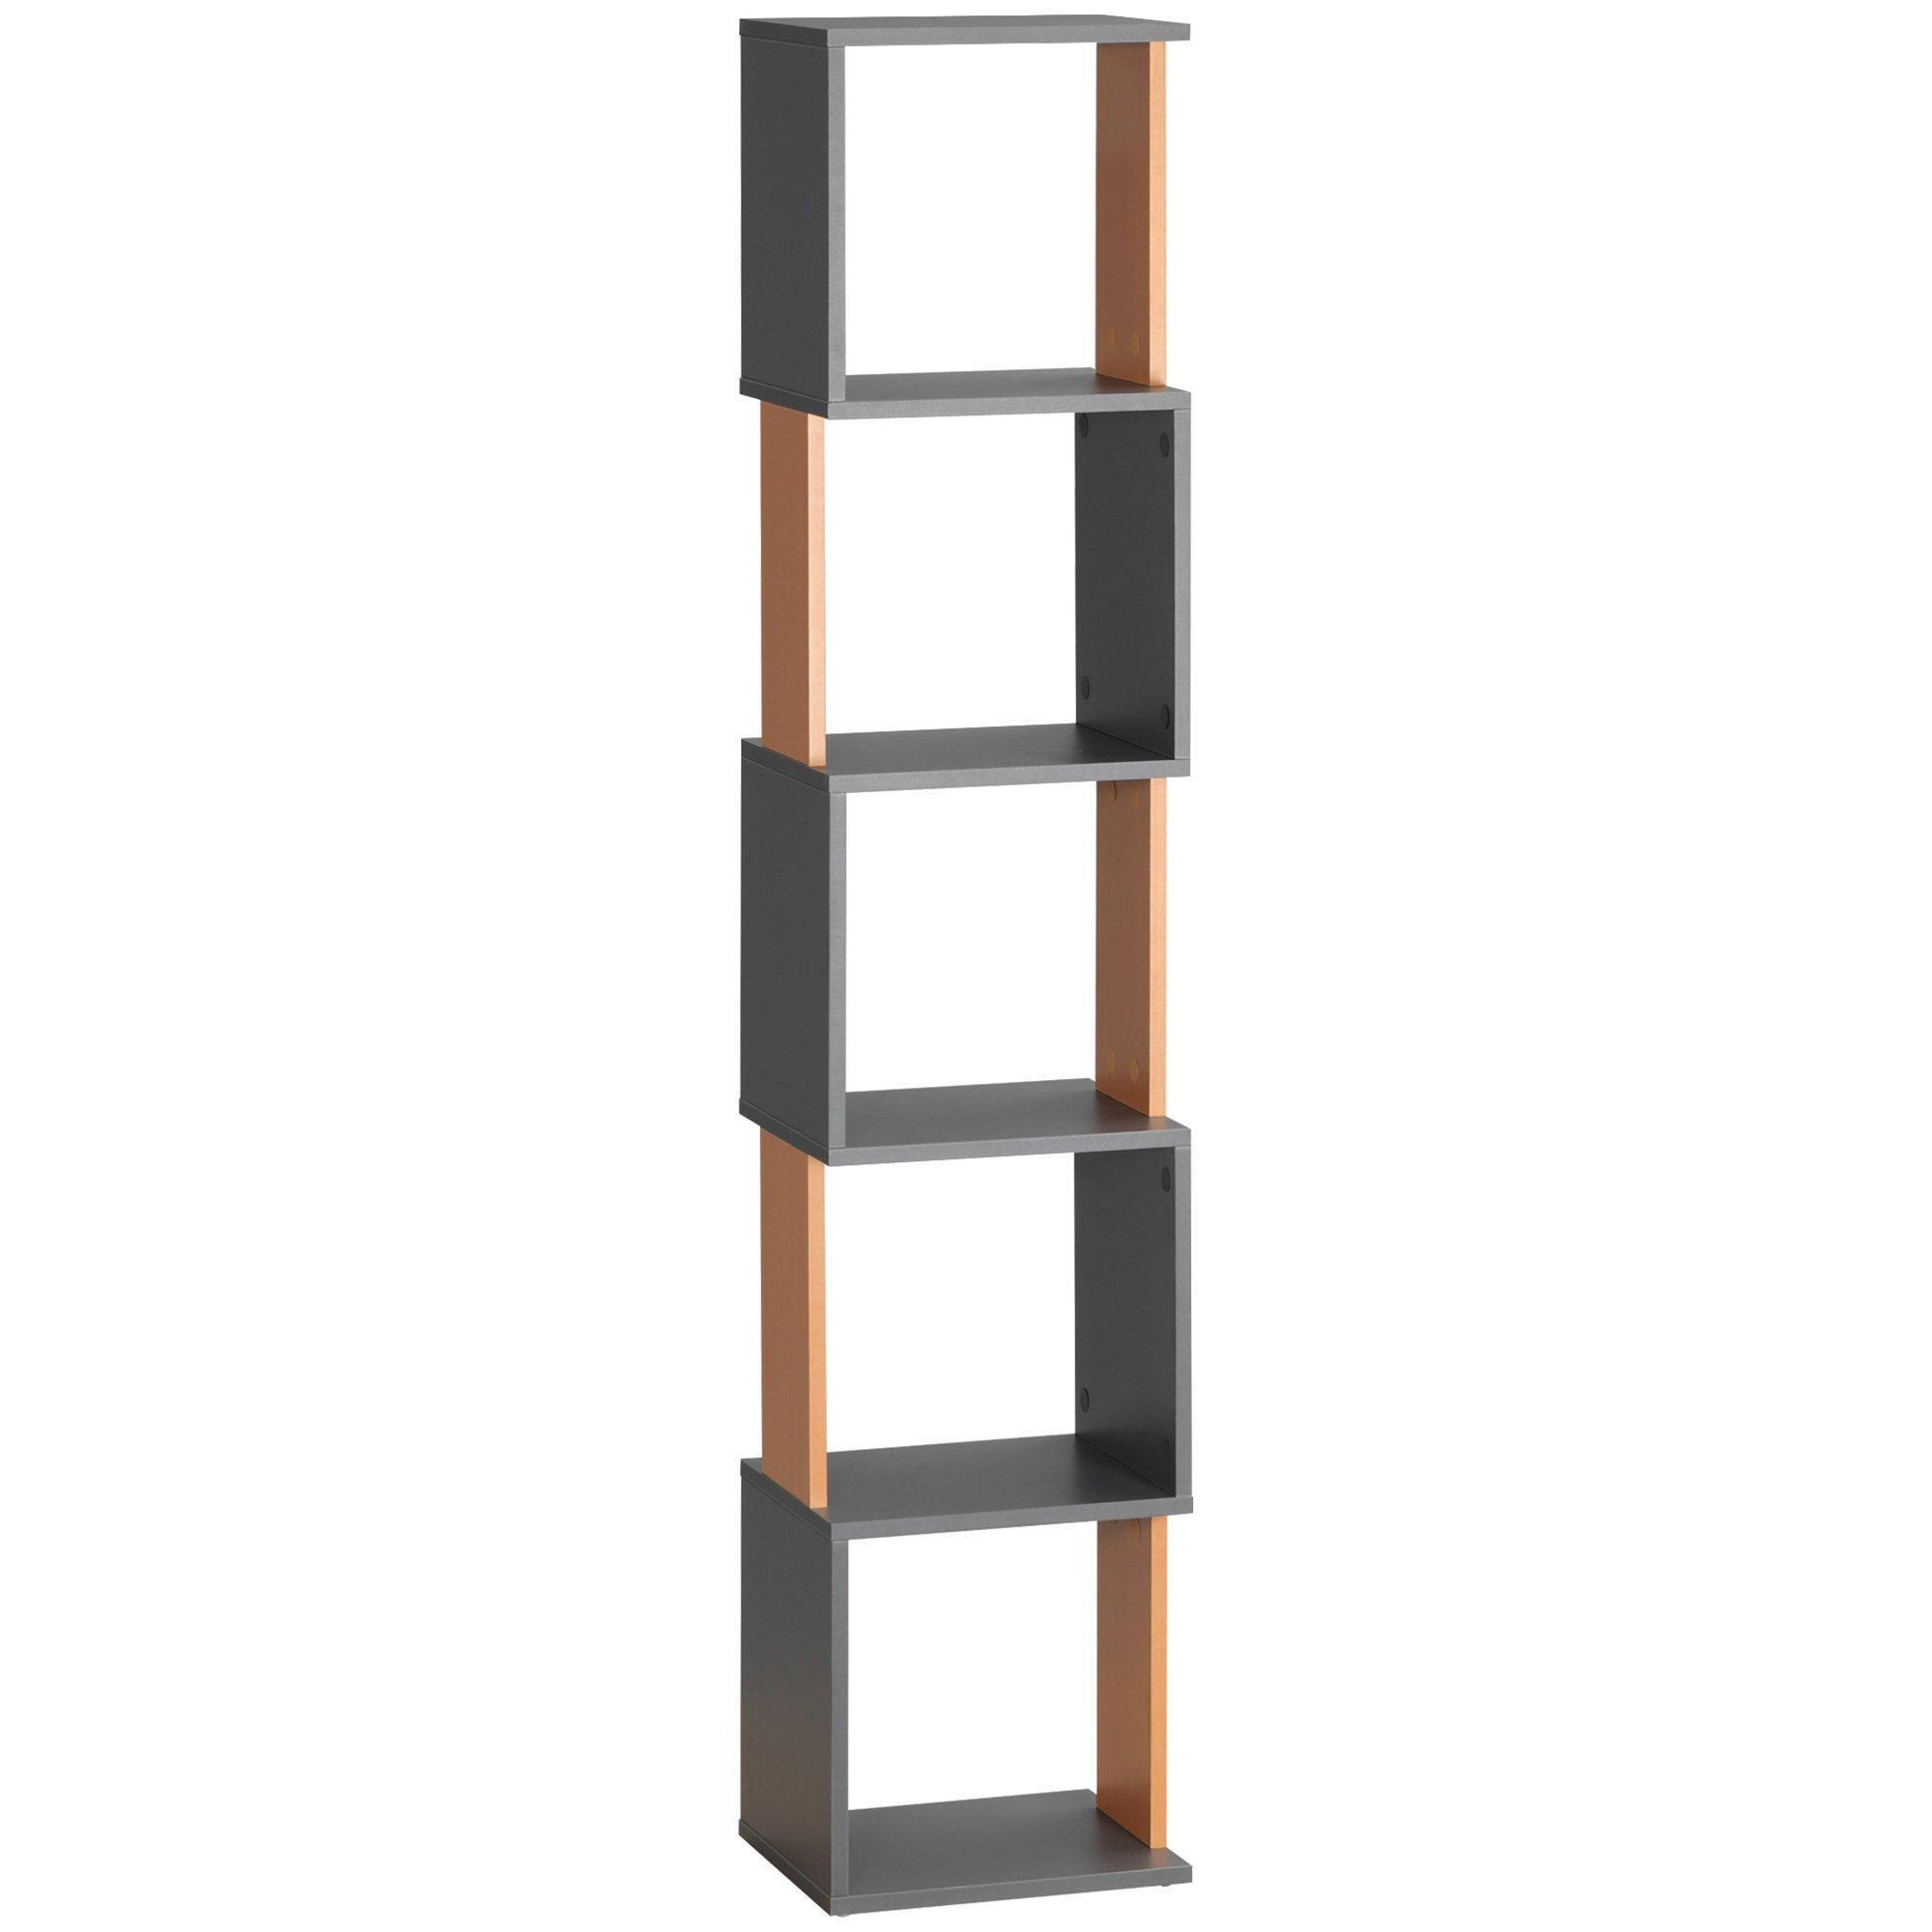 5-Tier Bookshelf Modern Bookcase Storage Shelving for Home Office - image 1